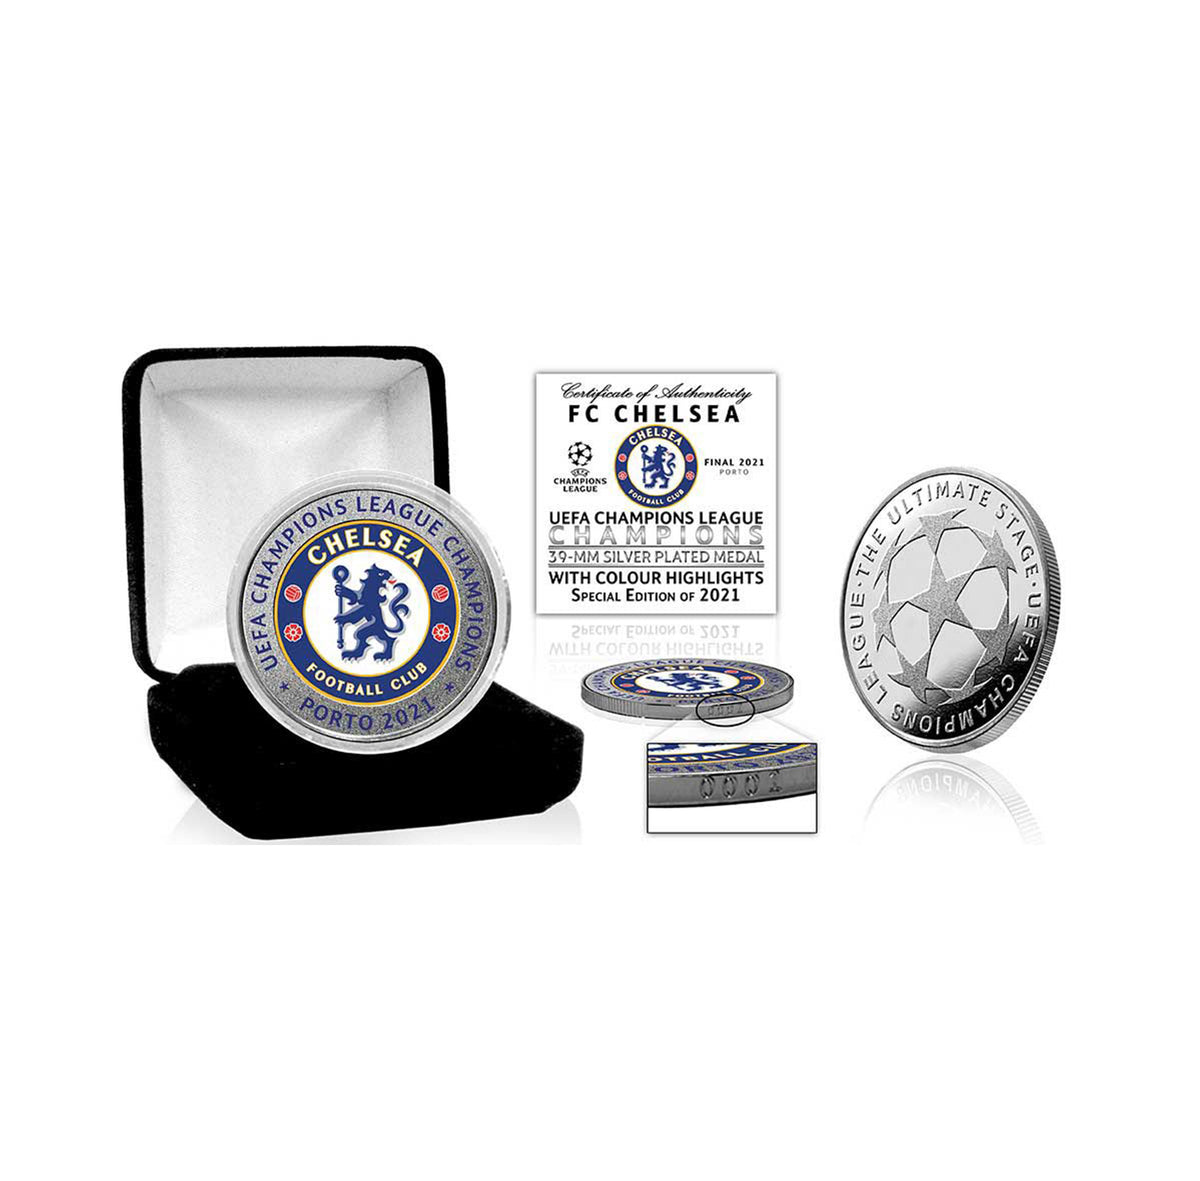 Champions League Chelsea 2021 Commemorative Coin in Gift Box